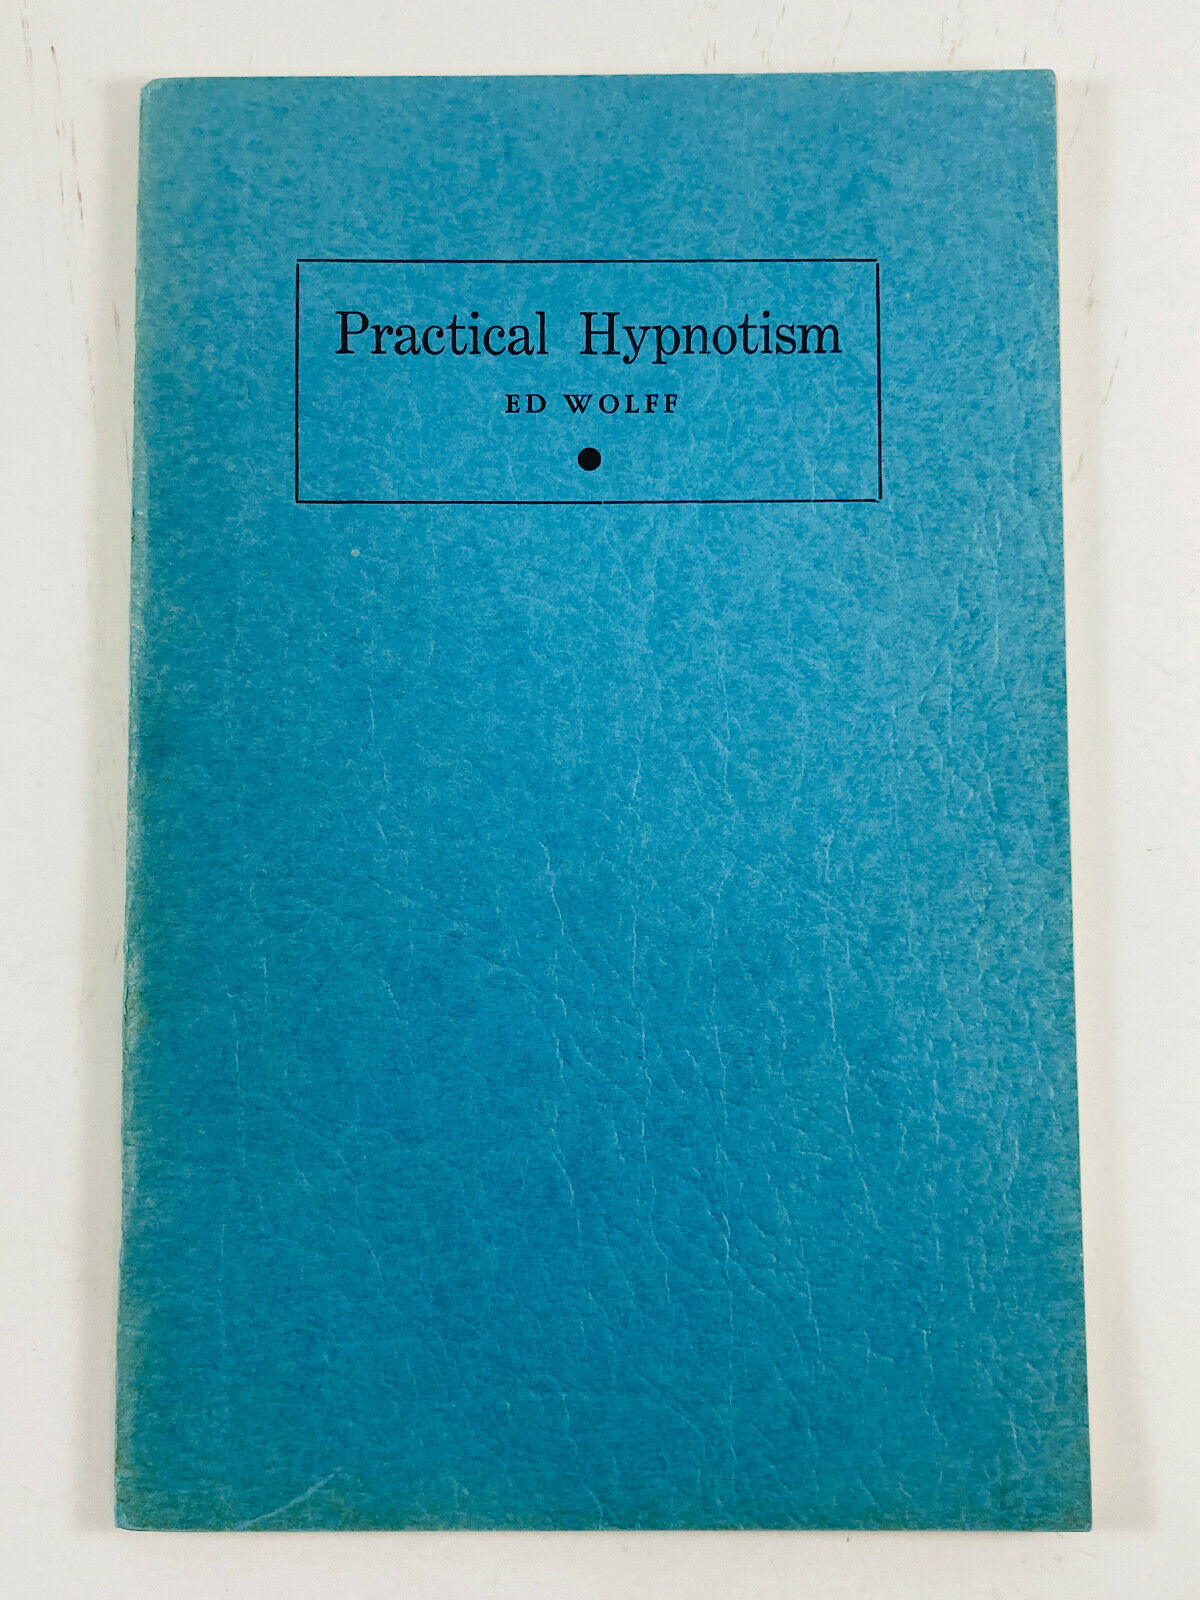 Vintage 1951 Magic Book PRACTICAL HYPNOTISM by Ed Wolff 3rd Printing